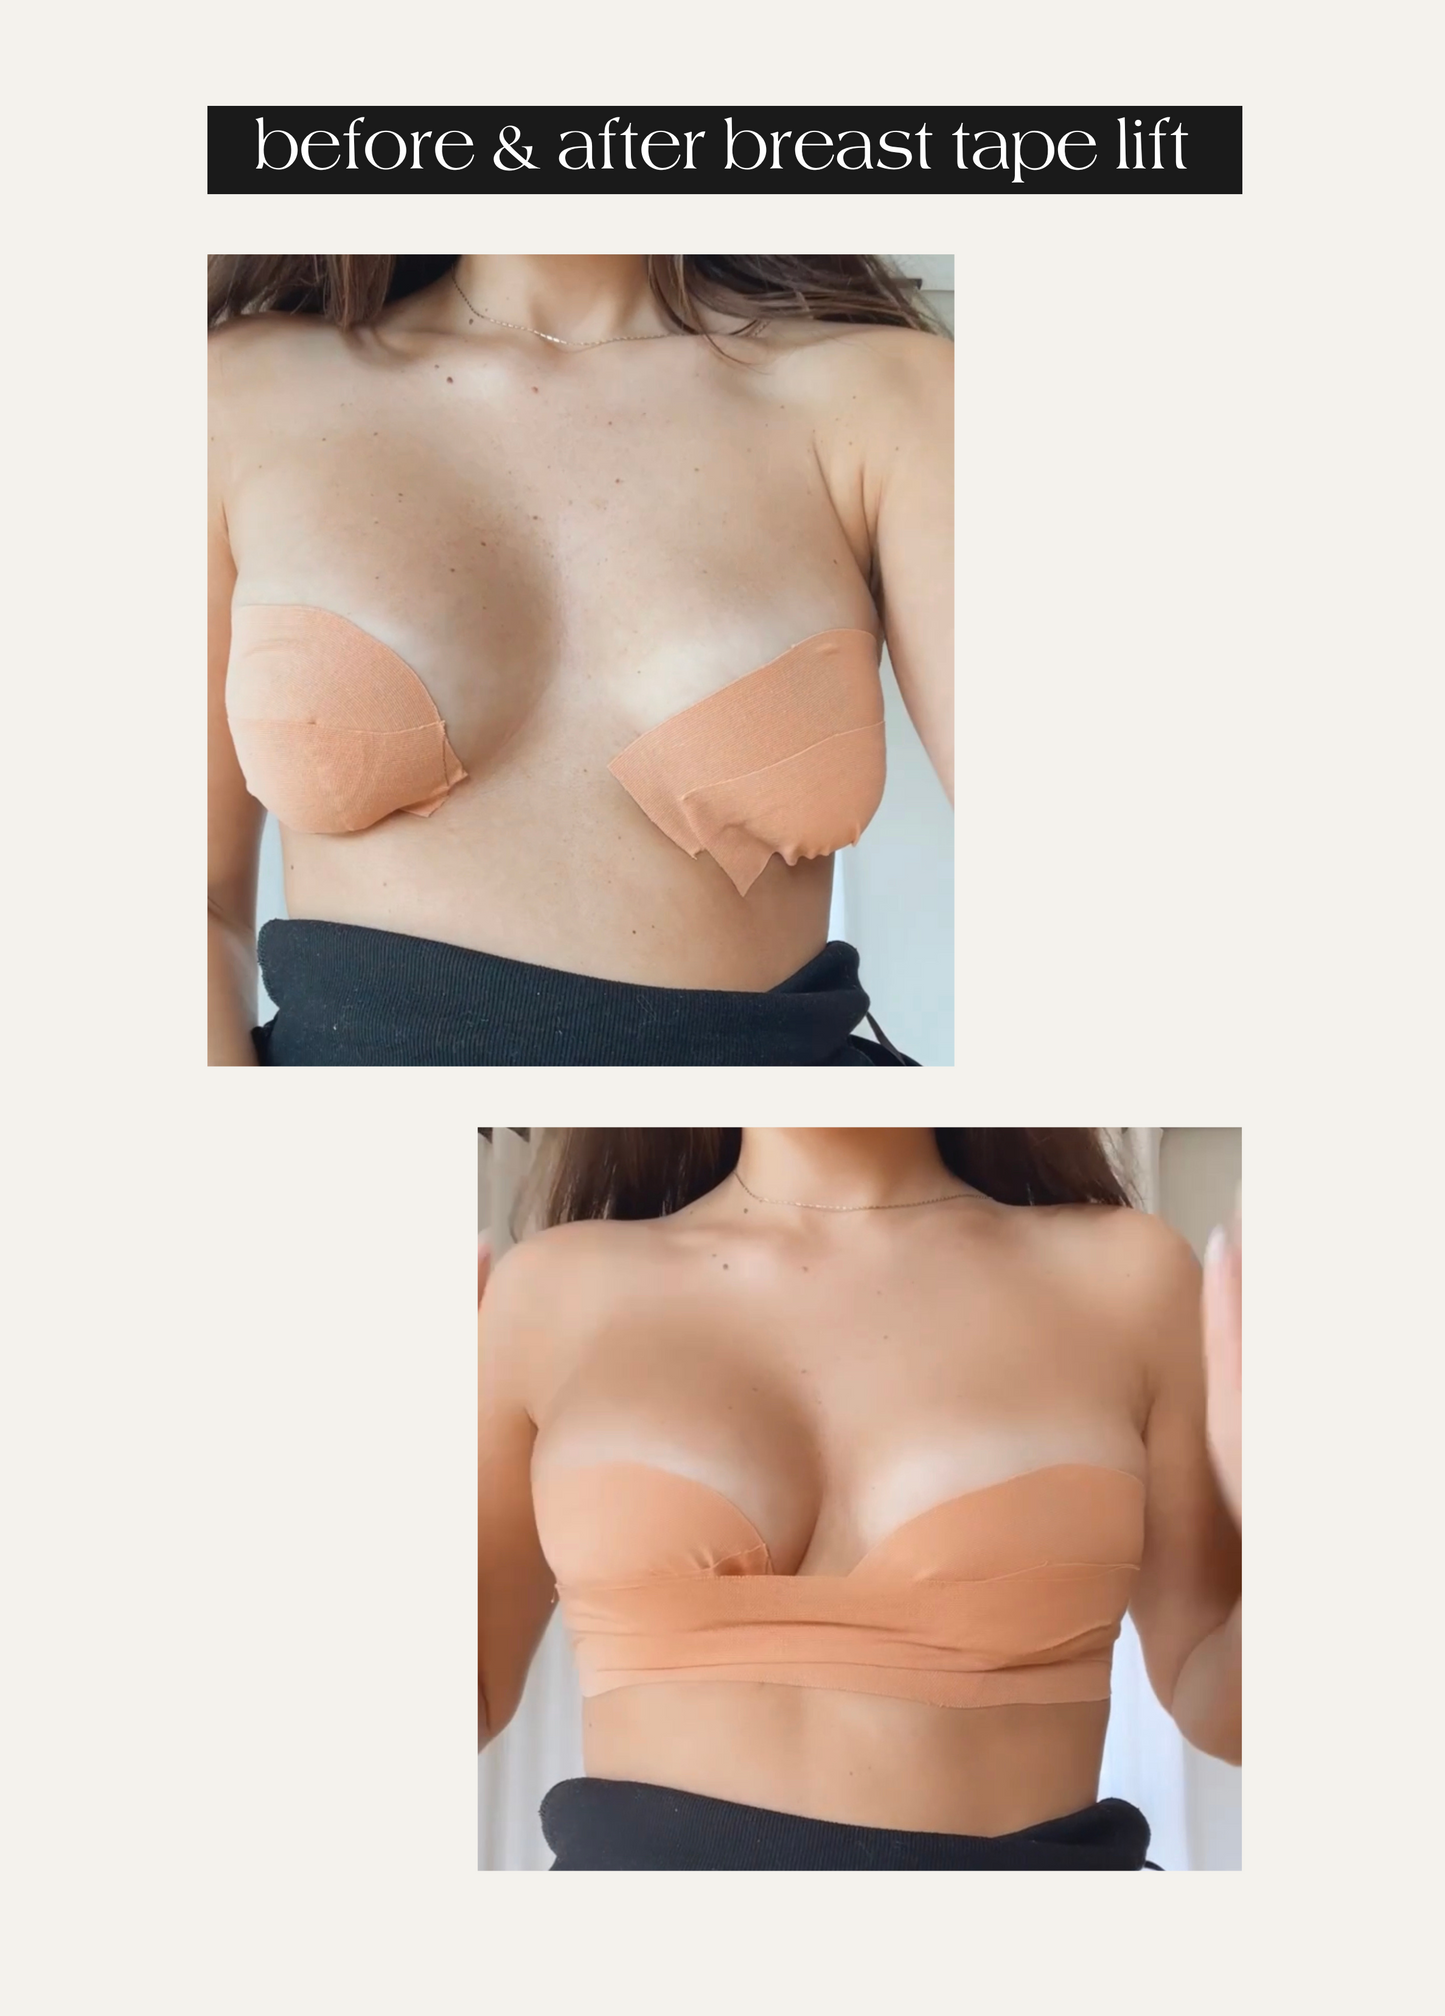 Breast Tape + Nipple Covers Bundle